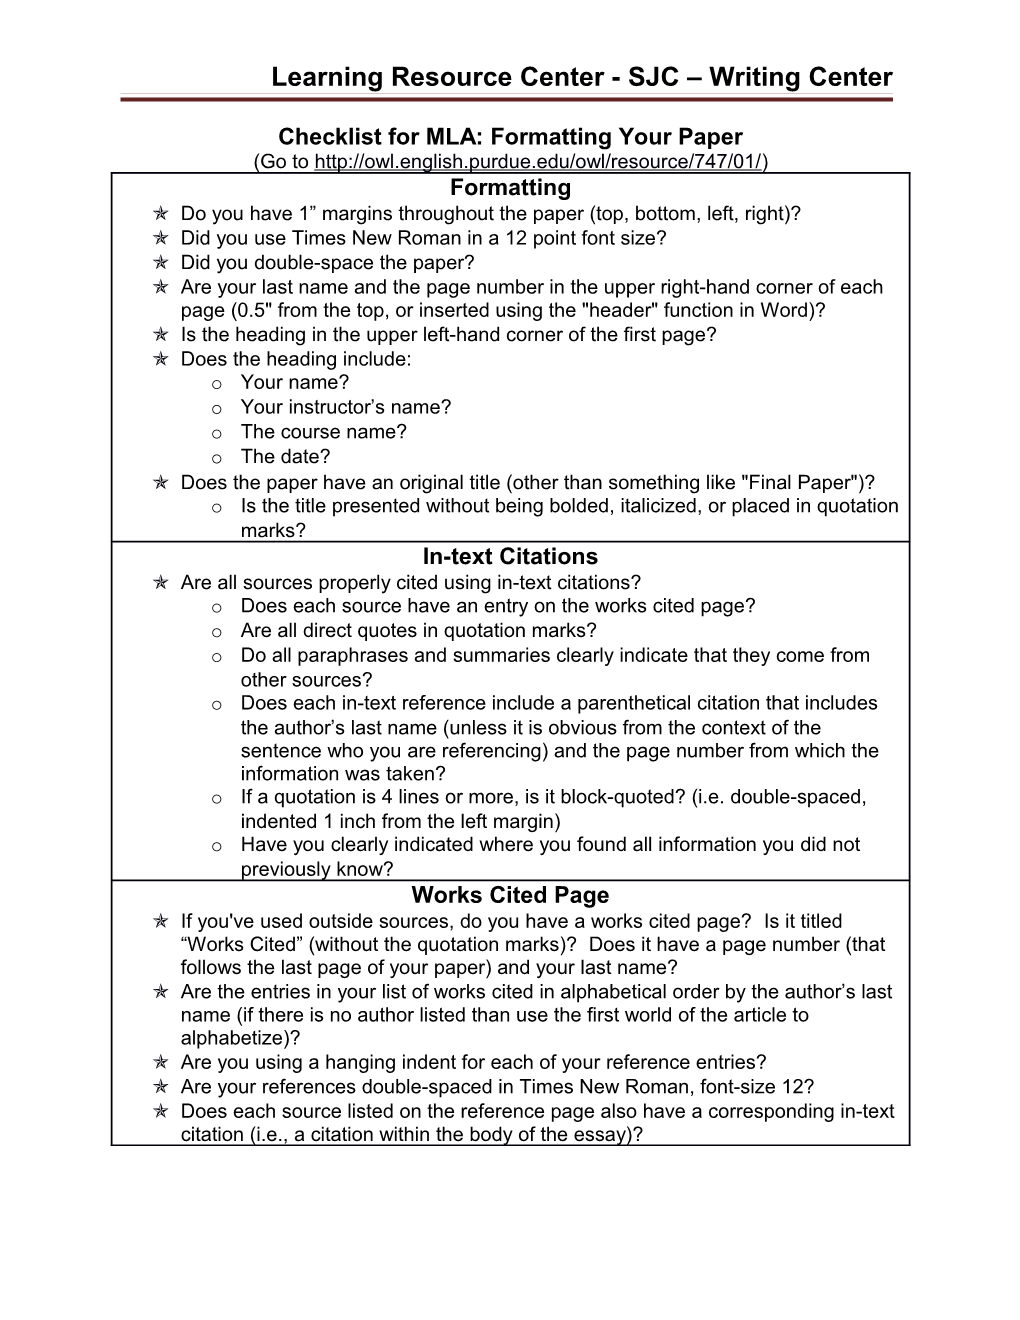 Checklist for MLA: Formatting Your Paper